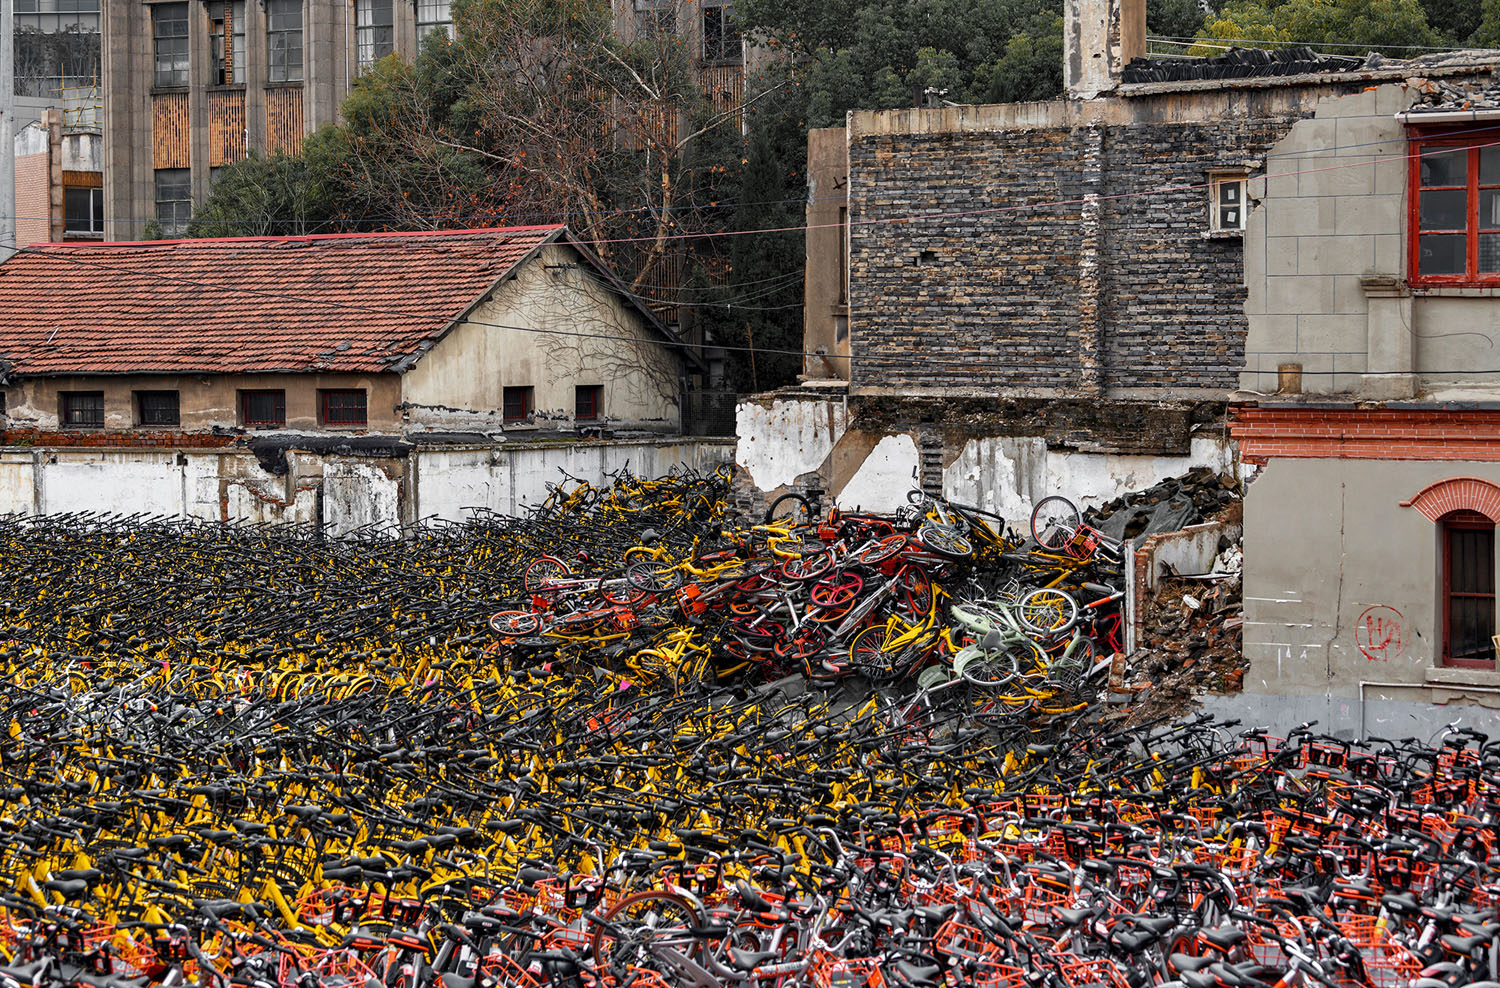 Bike Share Oversupply in China: Huge Piles of Abandoned and Broken